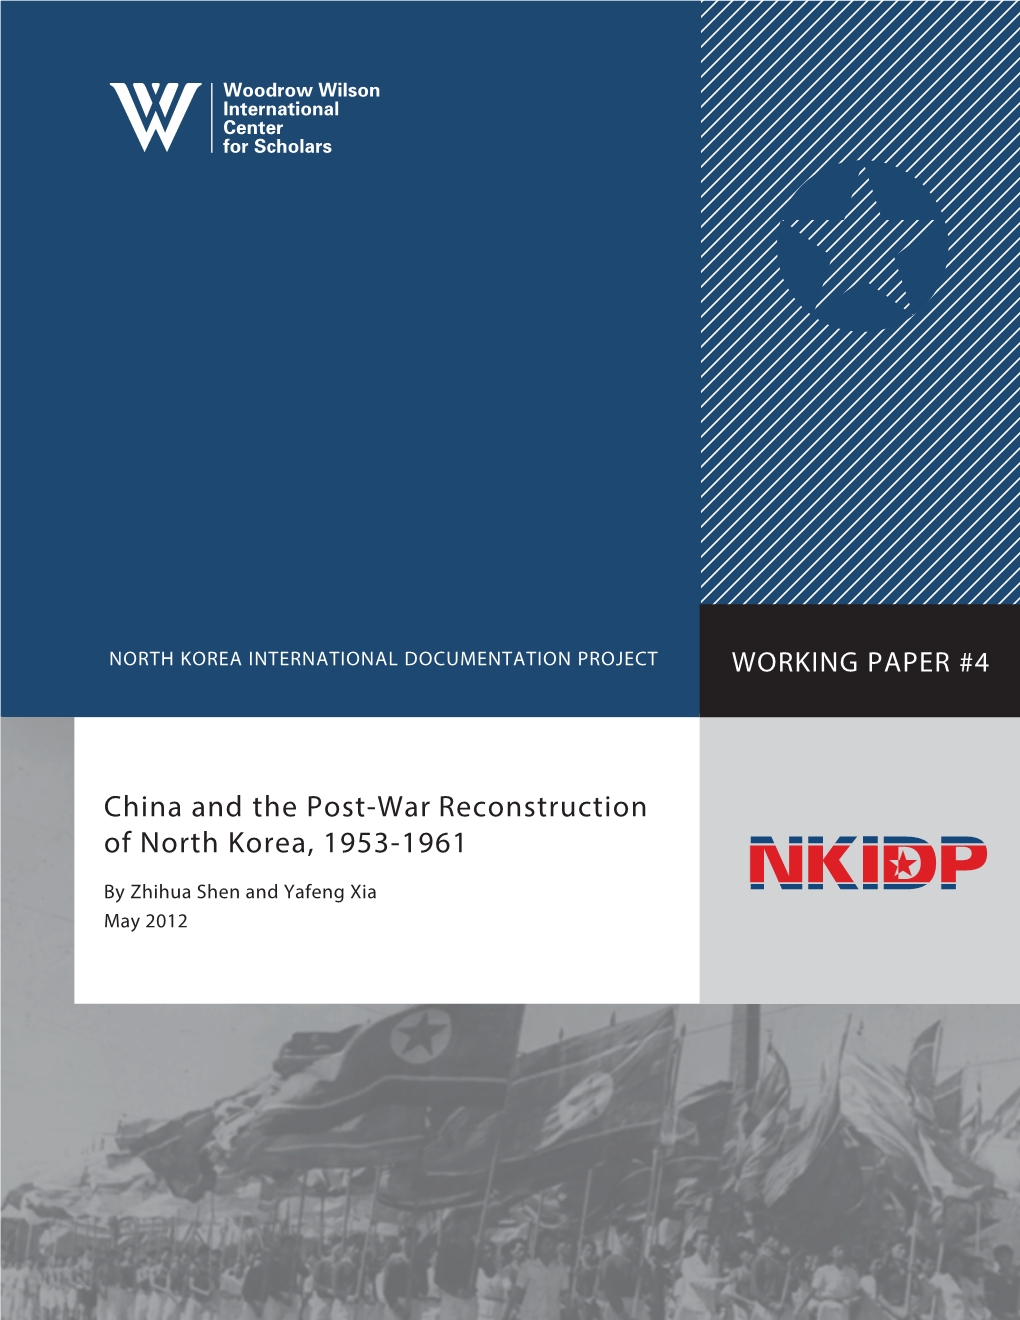 China and the Post-War Reconstruction of North Korea, 1953-1961